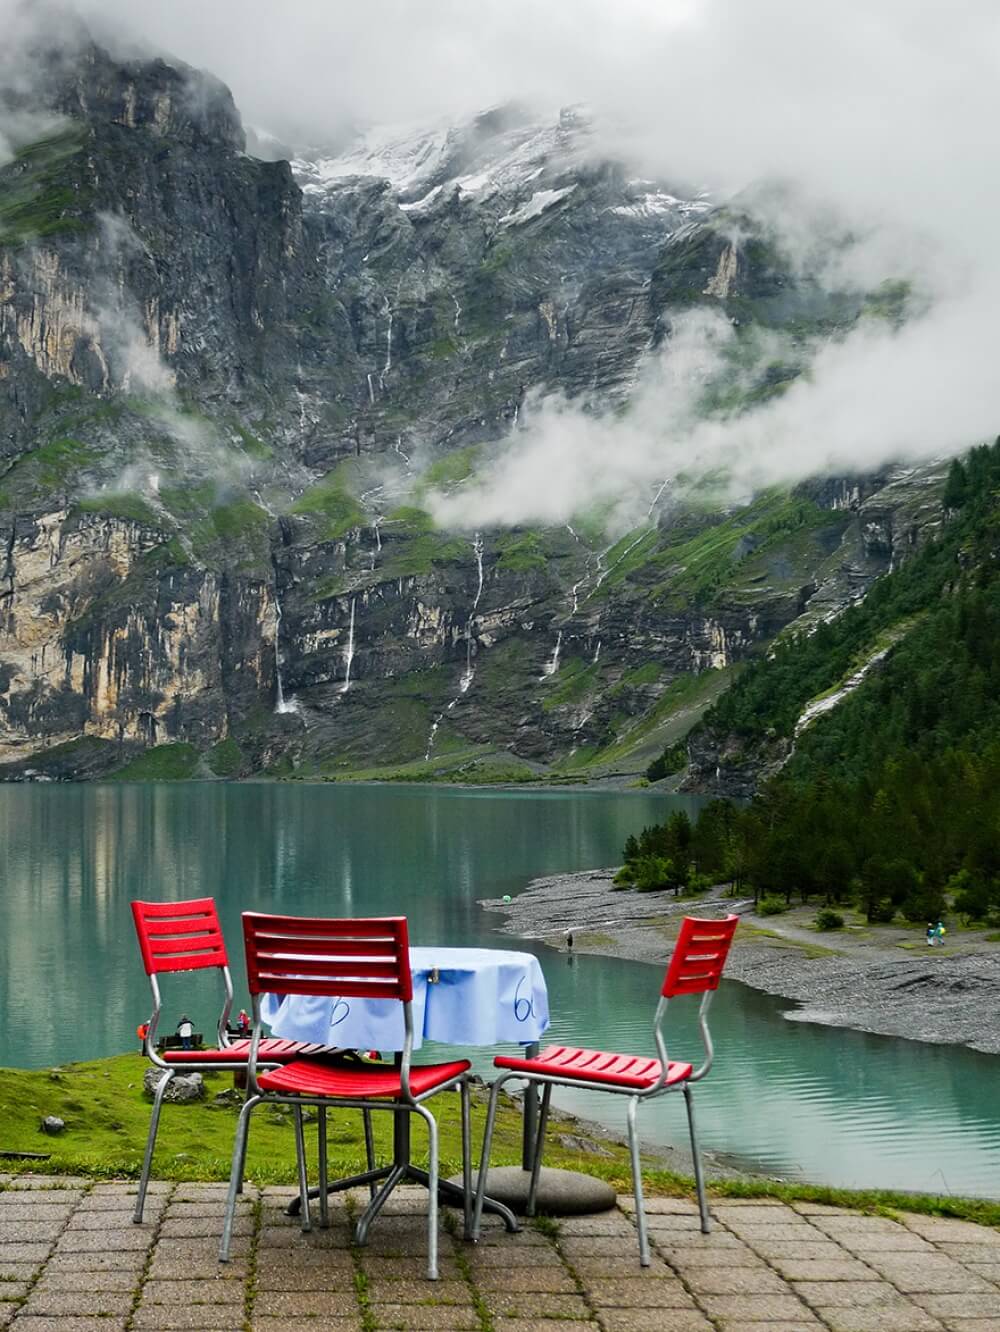 22 Stunning Hotels That Will Make You Want to Book Your Next Trip NOW! - Hotel-Restaurant Öschinensee, Switzerland